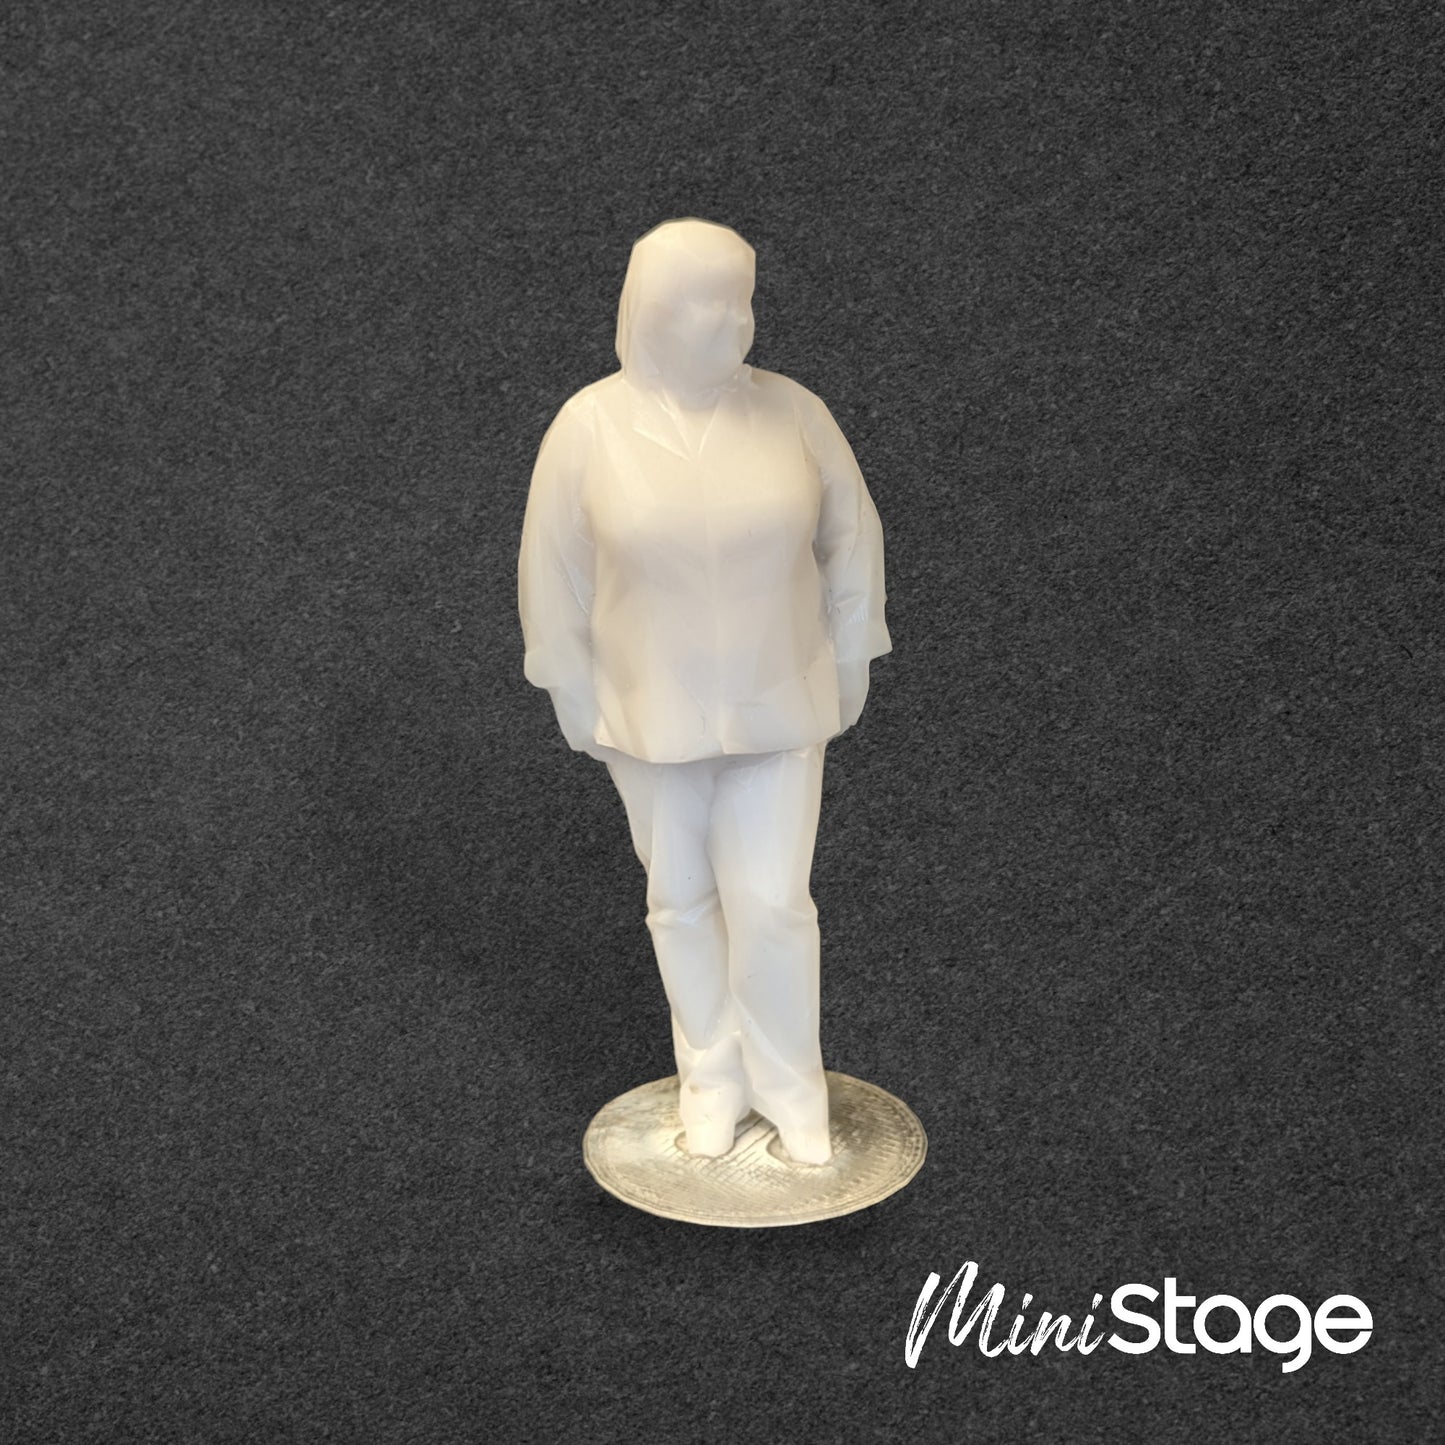 Debra - Scale modelbox unpainted figure of Woman Standing in Shirt